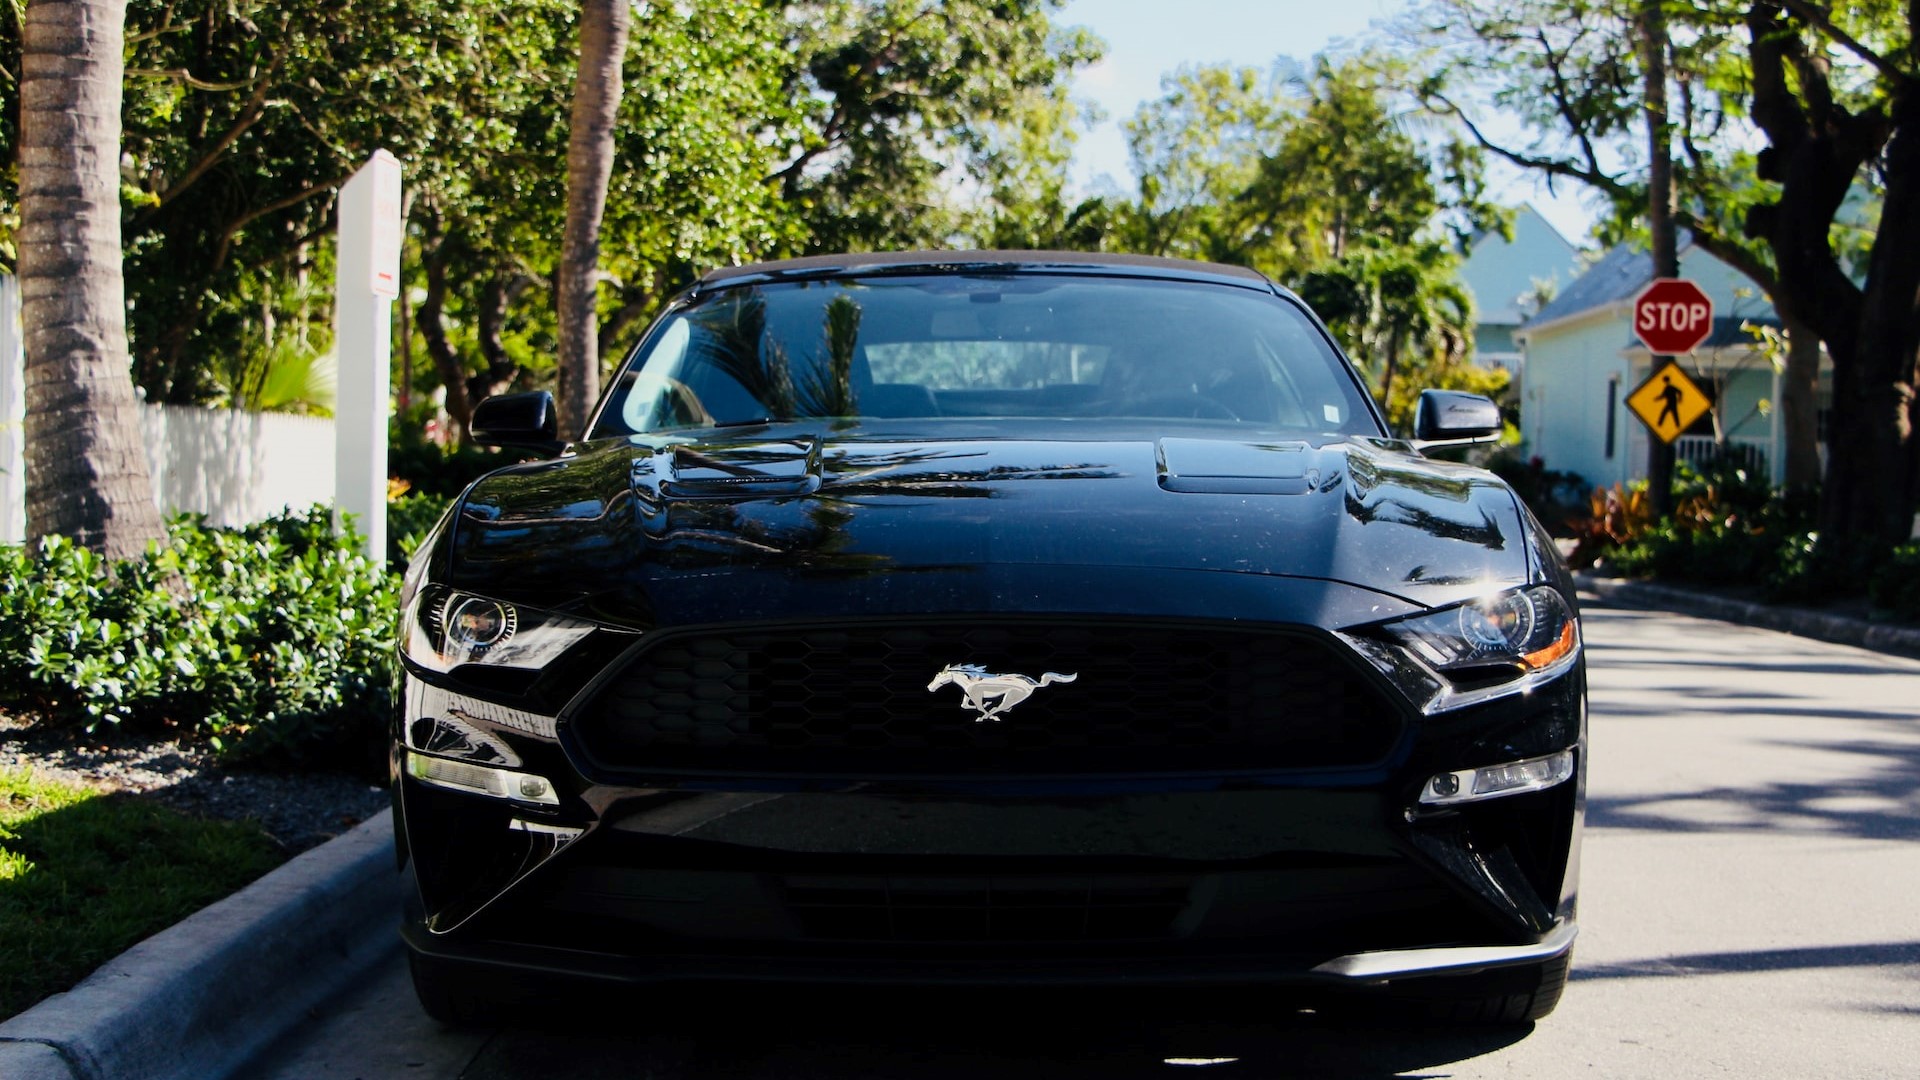 Mustang | Goodwill Car Donations